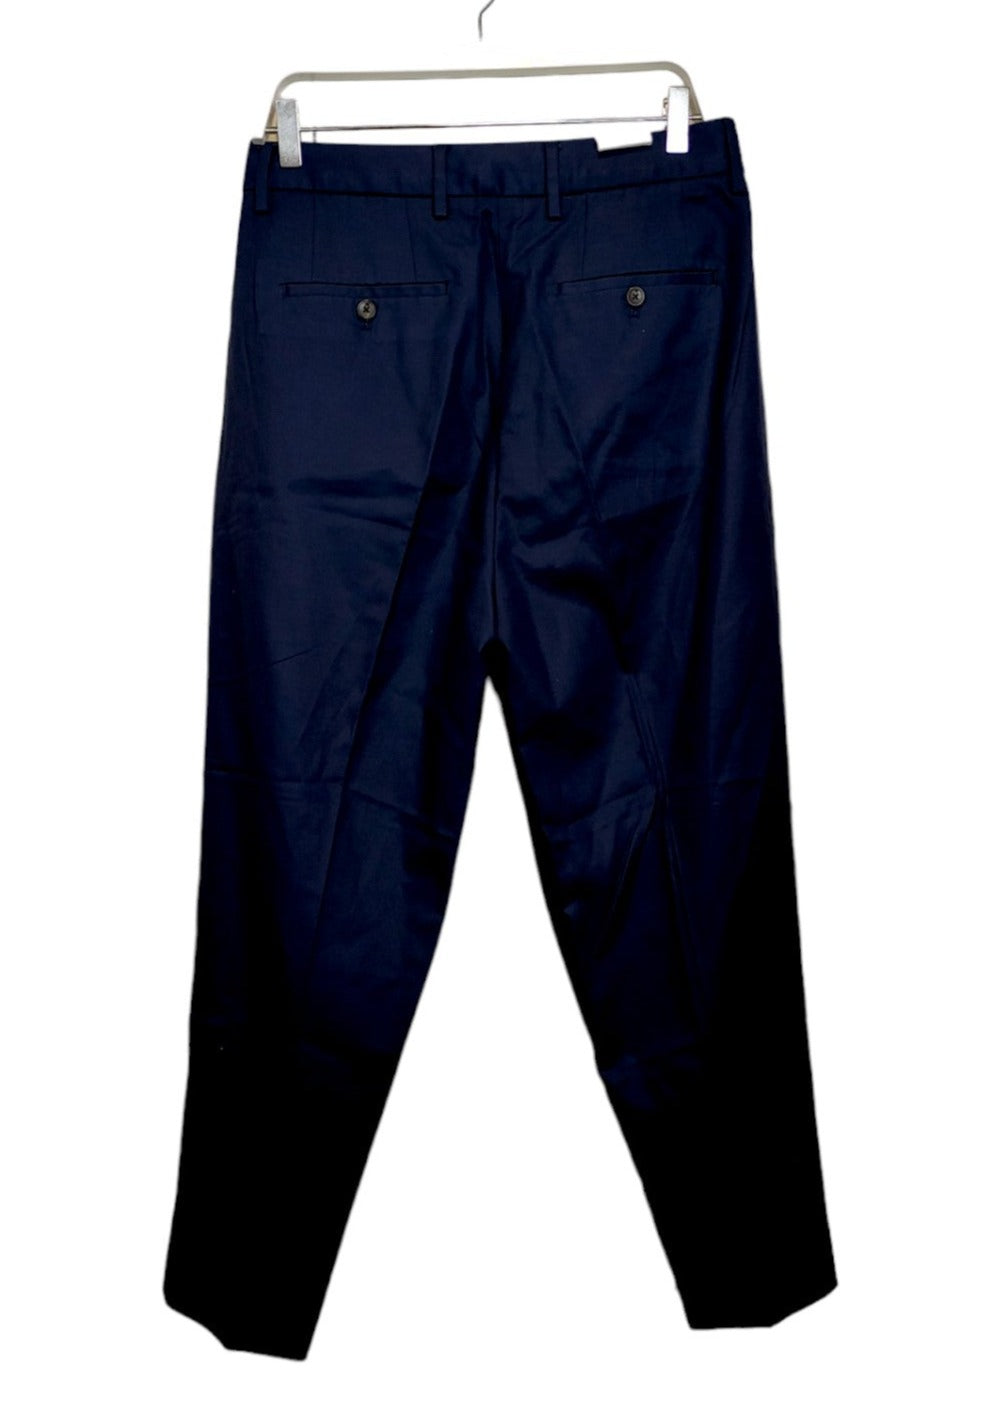 Stock, Ανδρικό Παντελόνι SCOTCH & SODA σε Σκούρο Μπλε Χρώμα (No 29)